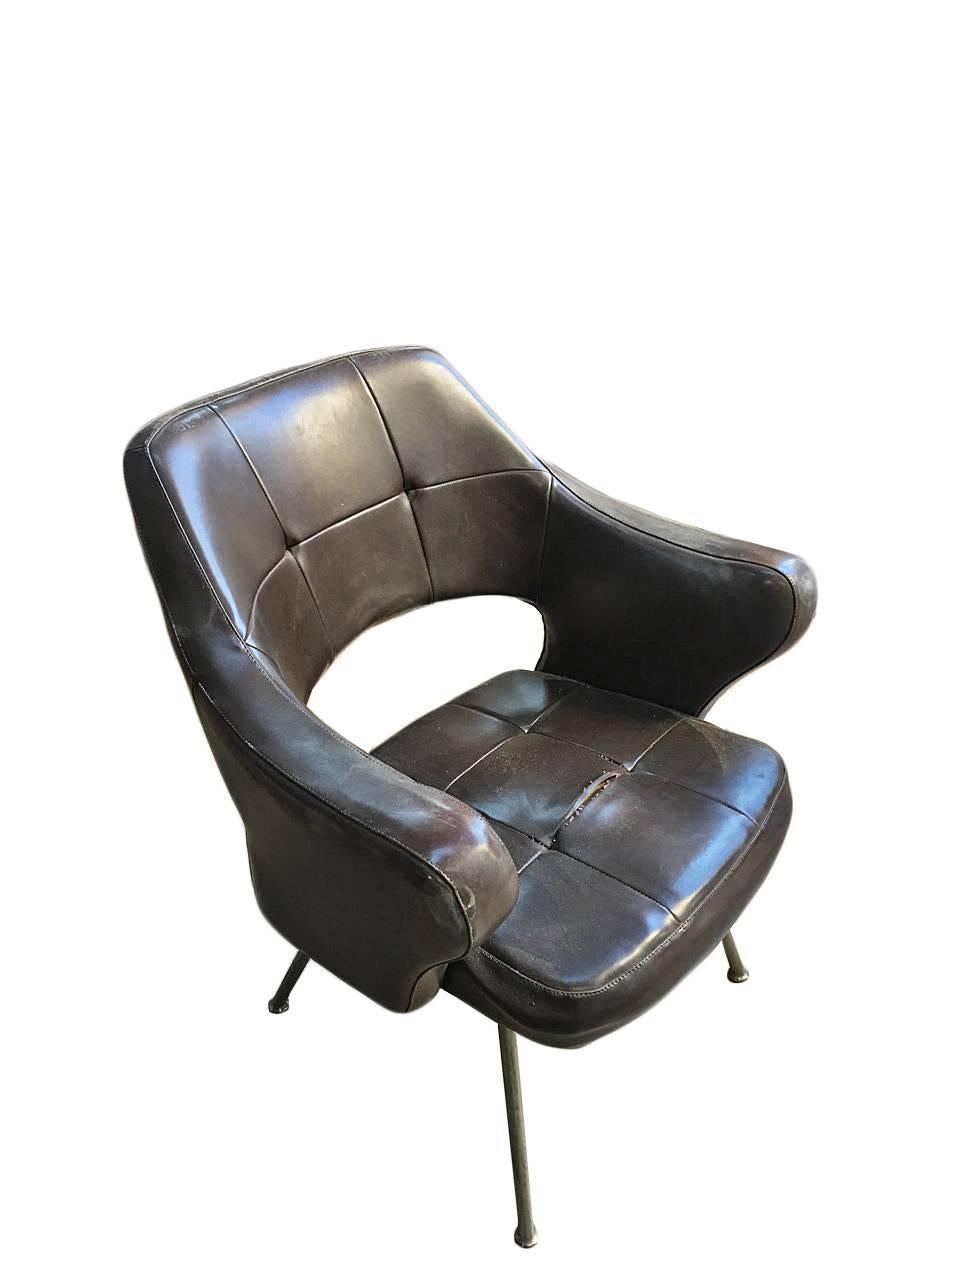 Rare pair of armchairs, design Gastone Rinaldi, 1950.
P16 model, chromed metal frame, to be restored,
Production Rima Padova.
Biography (Gastone Rinaldi Designer alla RIMA).